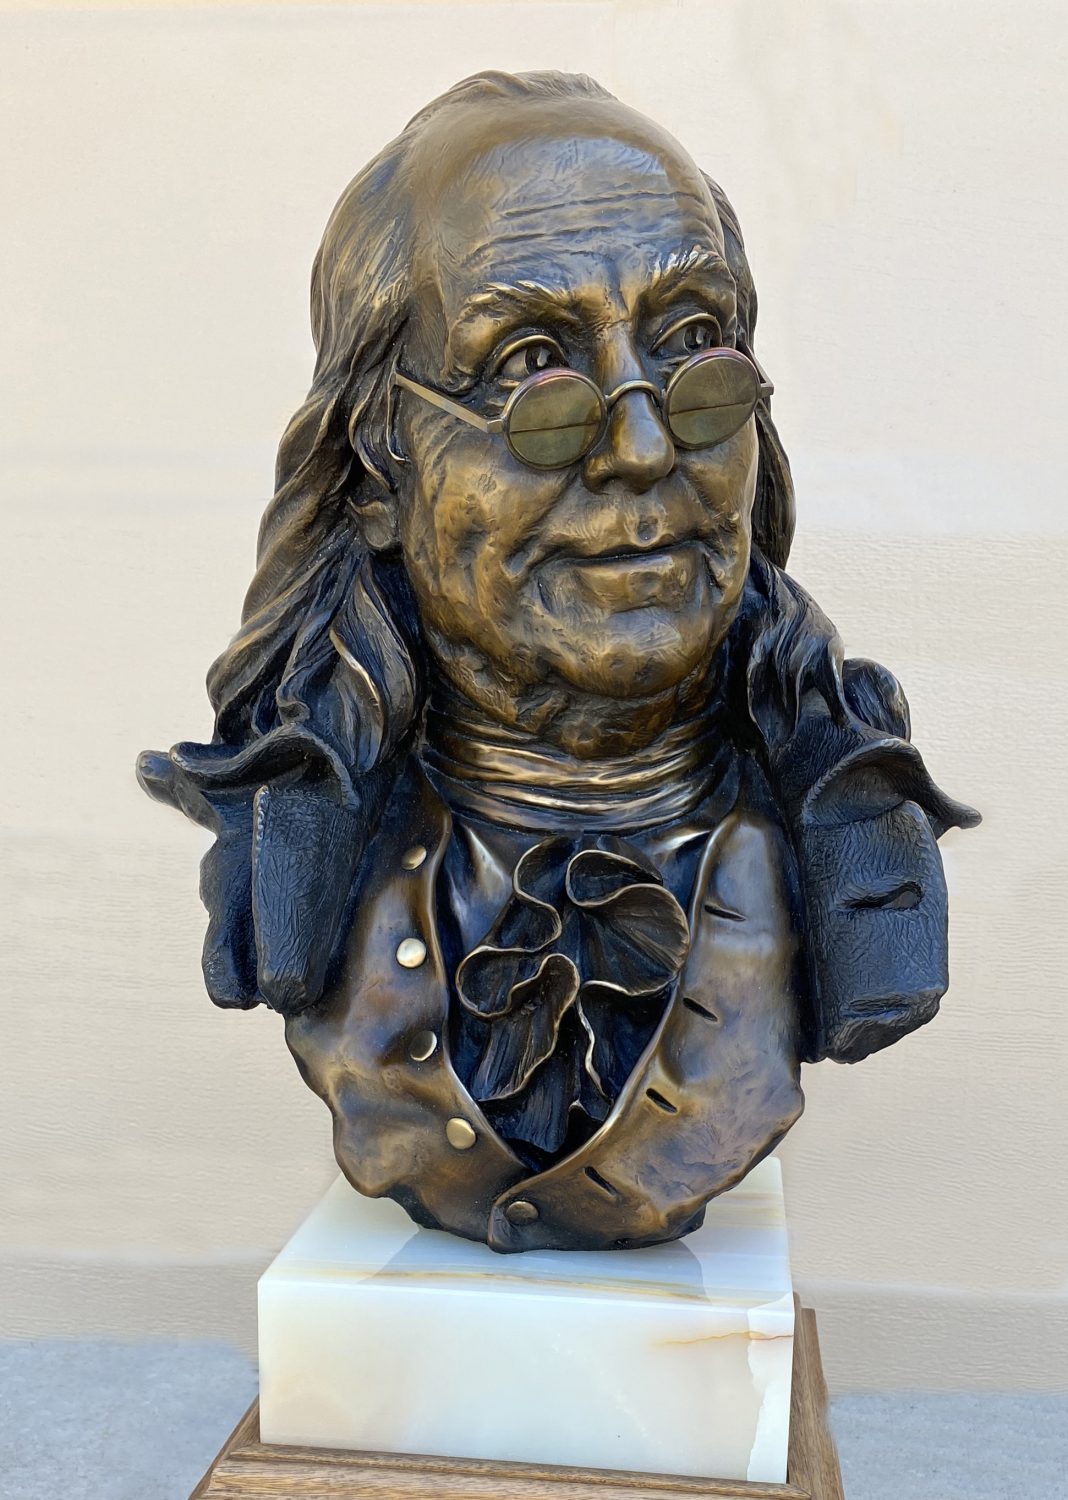 George Lundeen Ben Franklin Bust portrait historical figure America founding father western bronze sculpture close up